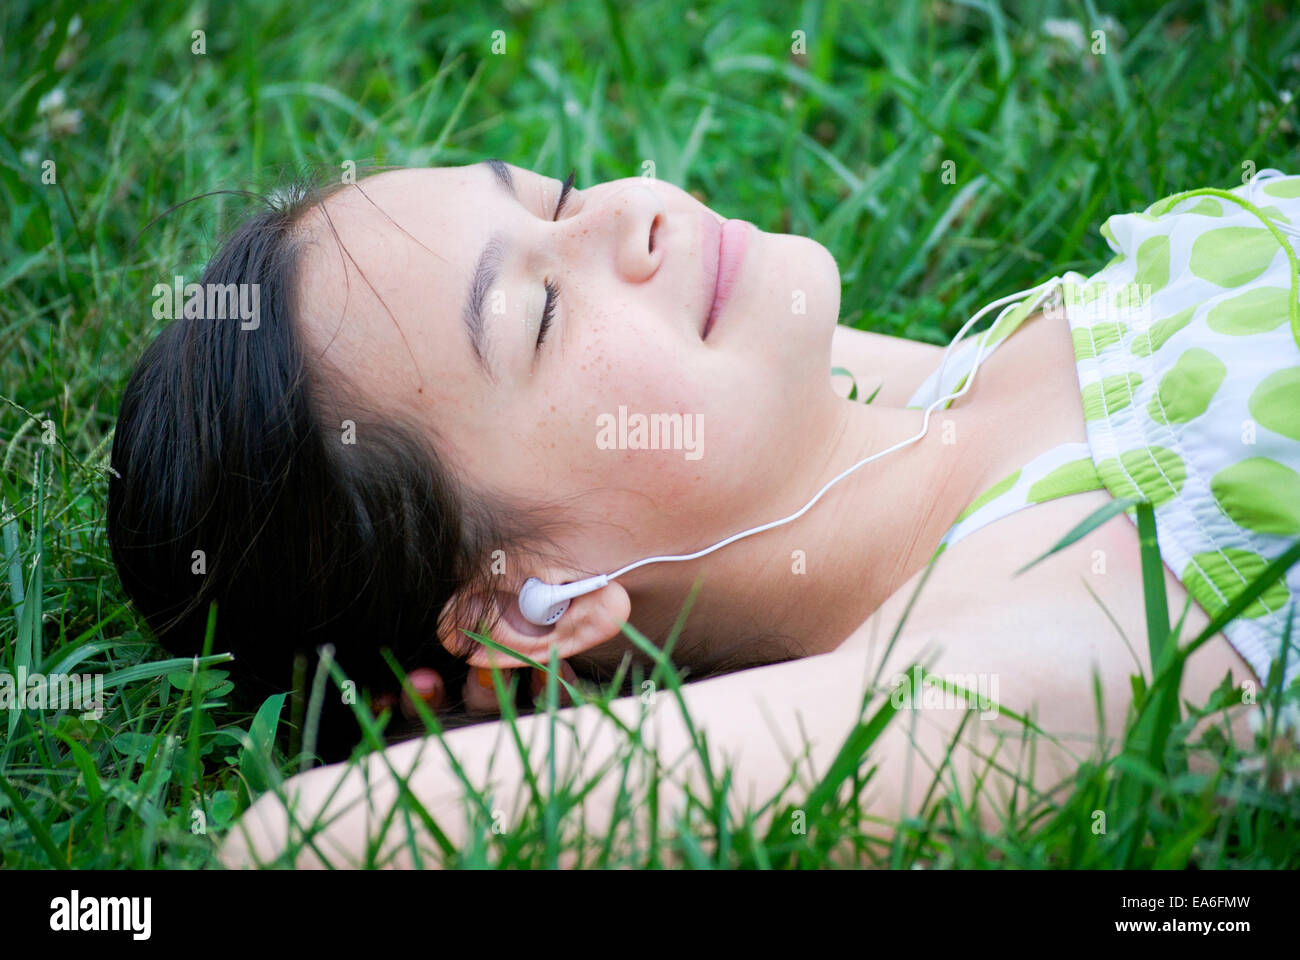 Girl lying on grass listening to music Stock Photo